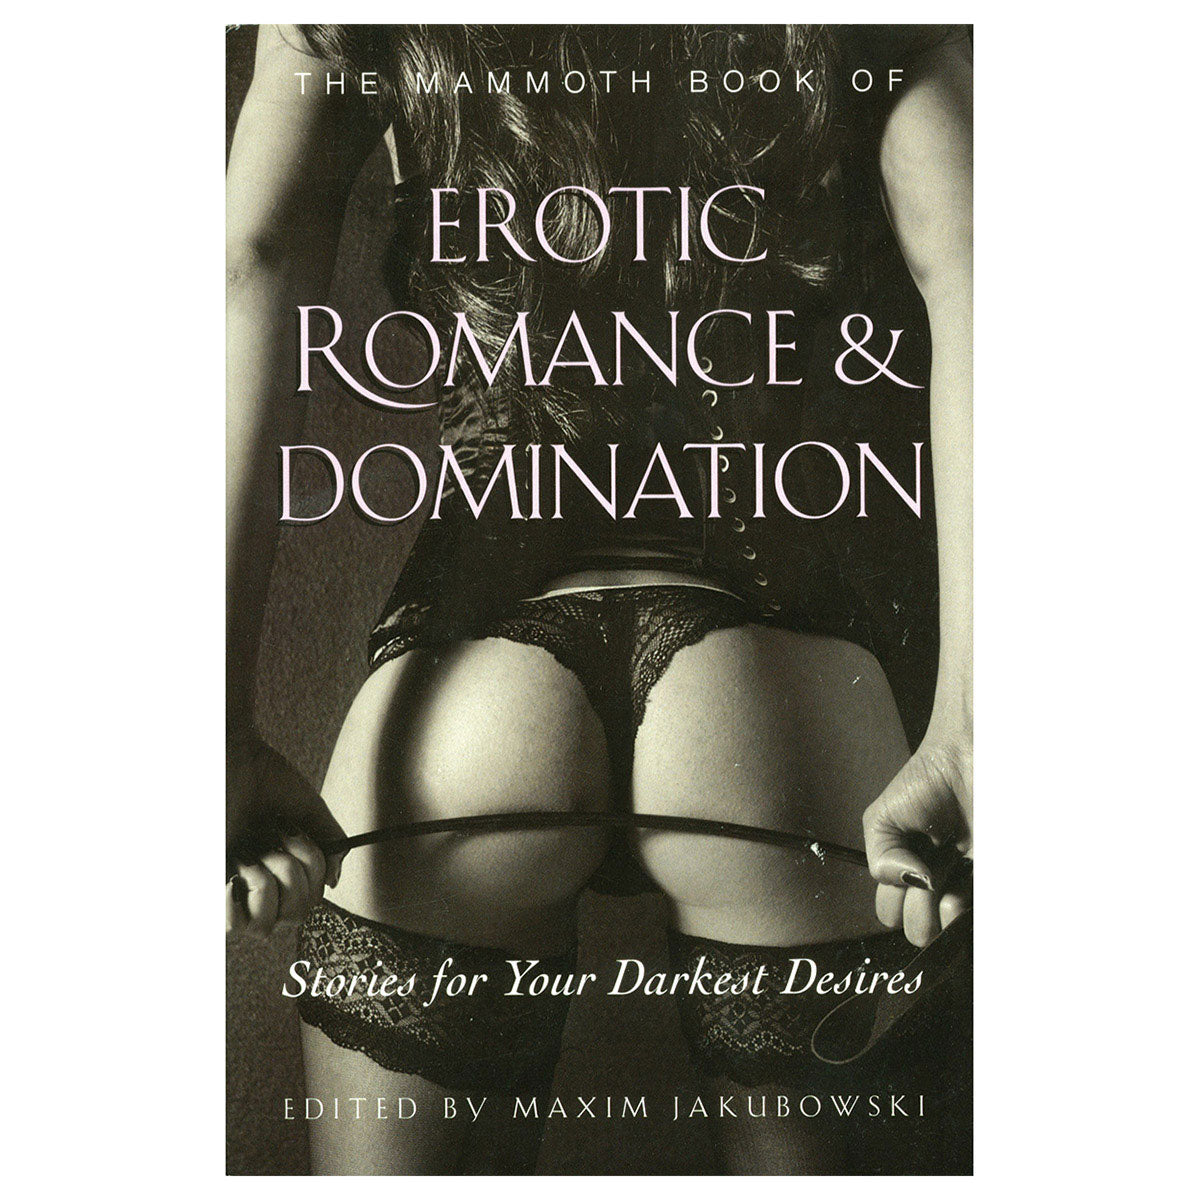 Mammoth Book of Erotic Romance & Domination - Stories for Your Darkest Desires - Running Press